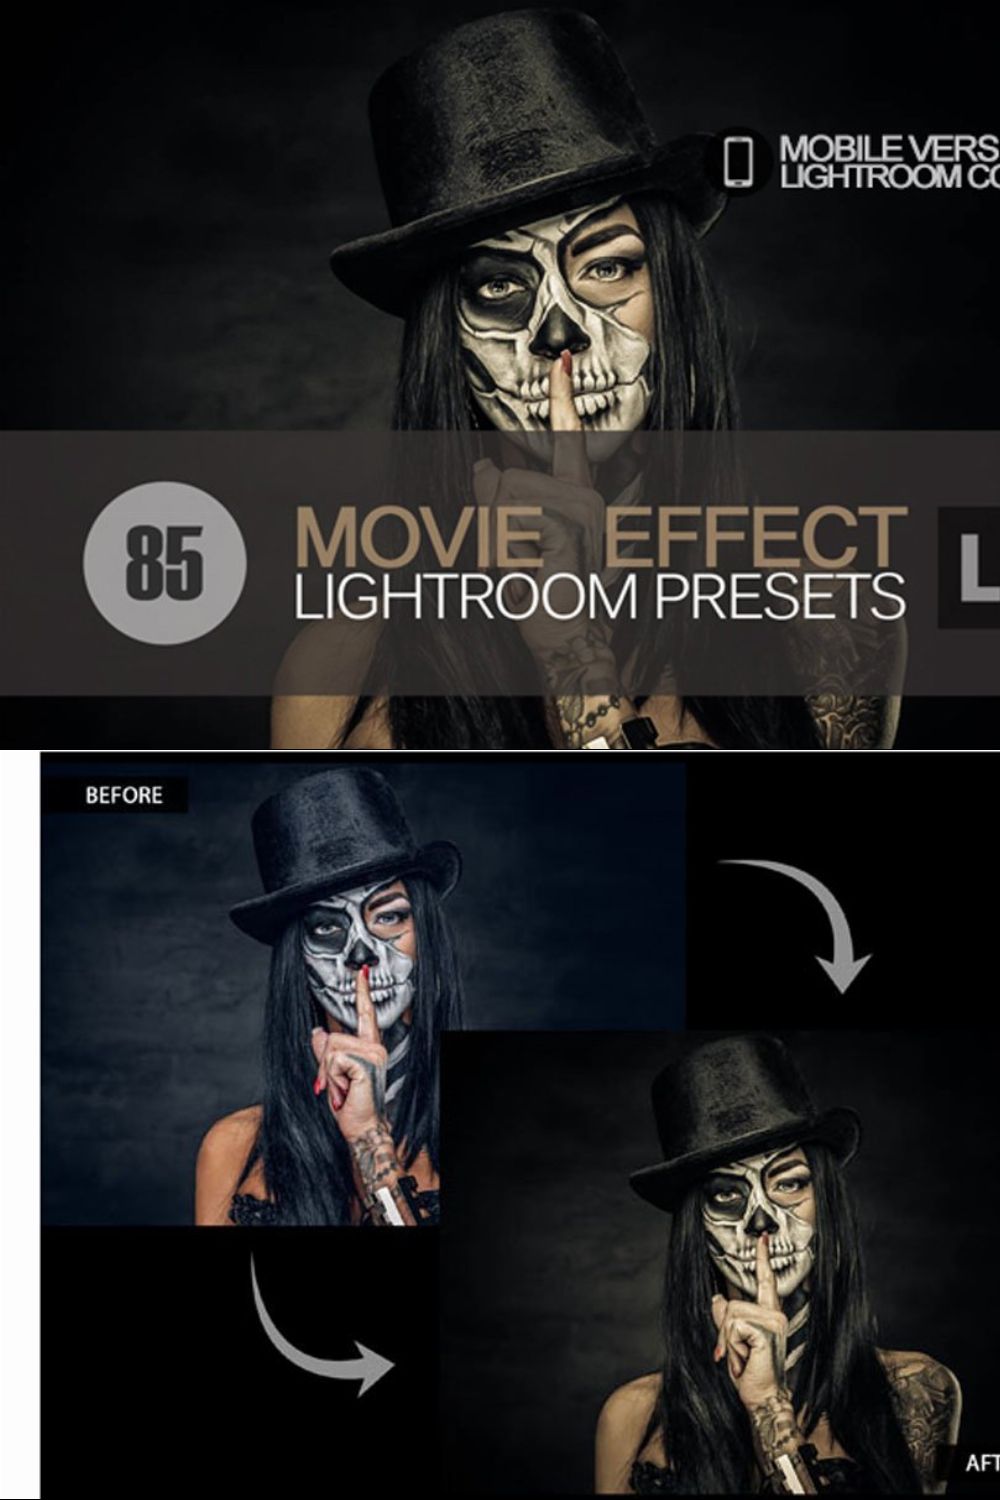 Movie Effect Lightroom Mobile Preset pinterest preview image.